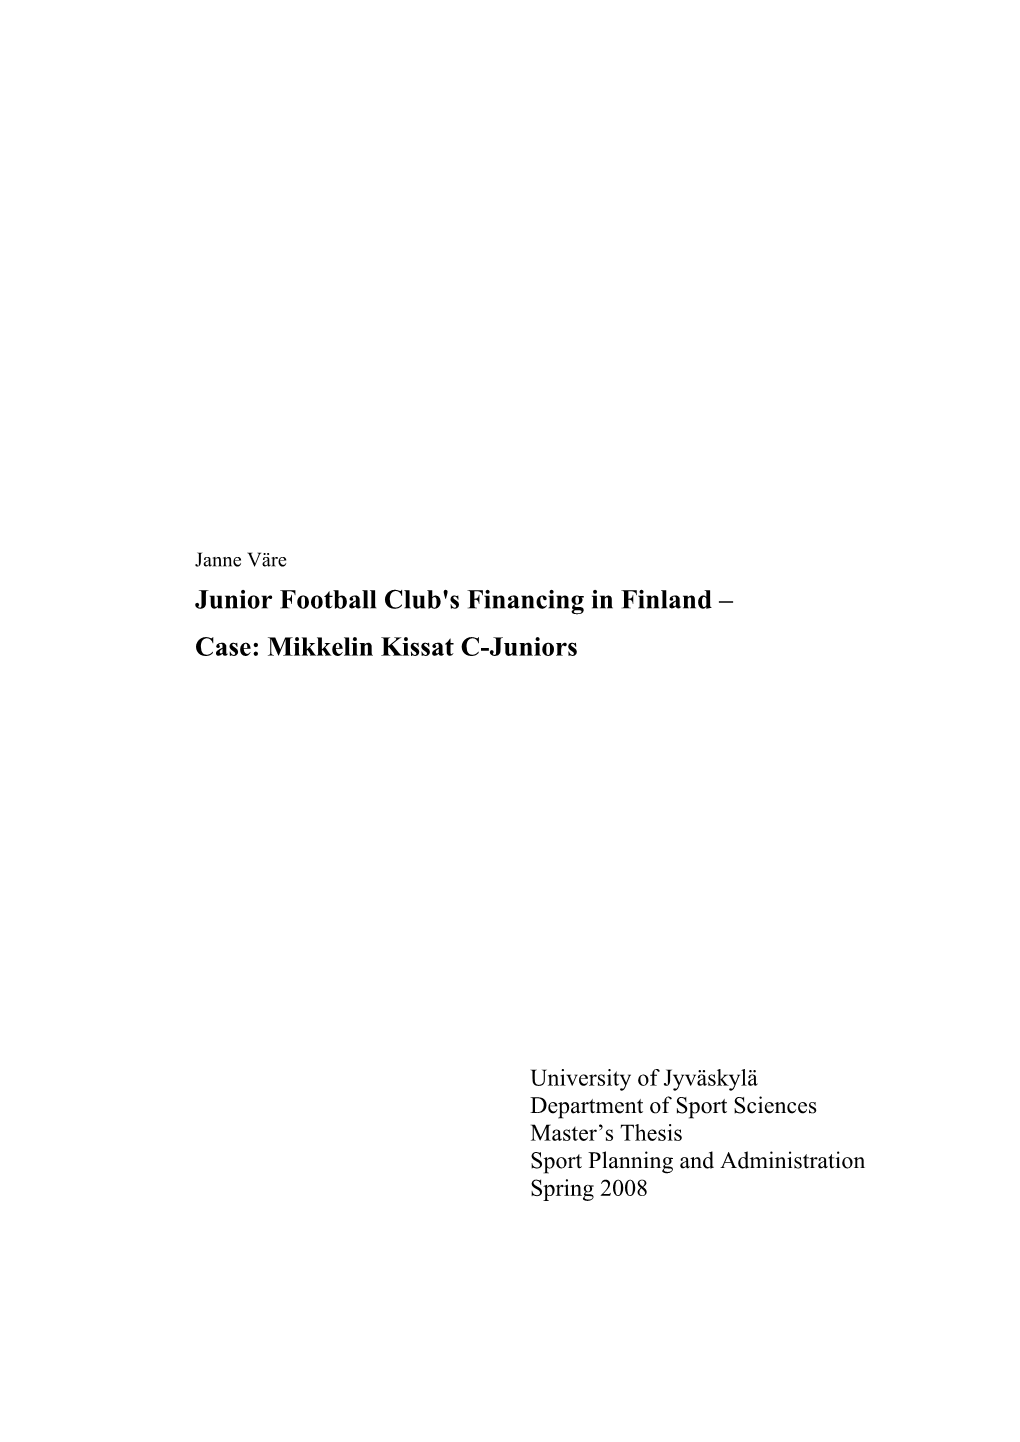 Junior Football Club's Financing in Finland – Case: Mikkelin Kissat C-Juniors